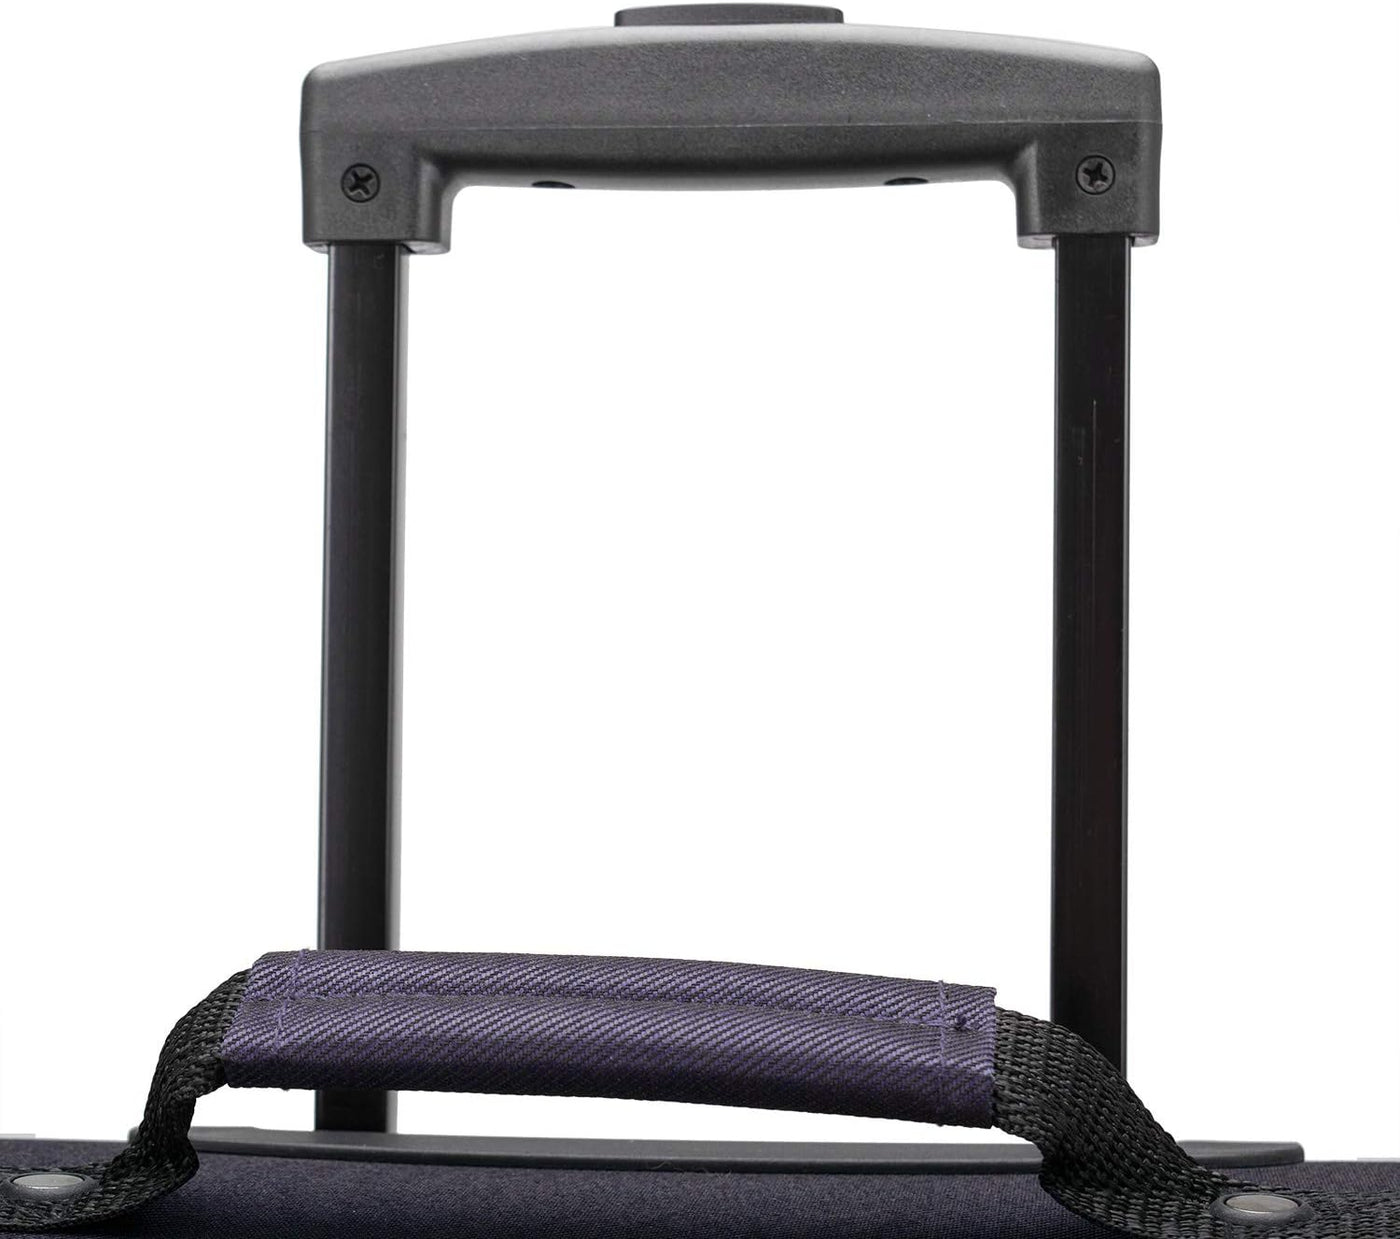 U.S. Traveler Aviron Bay Expandable Softside Luggage, Spinner Wheels, Purple, 30-Inch - $50